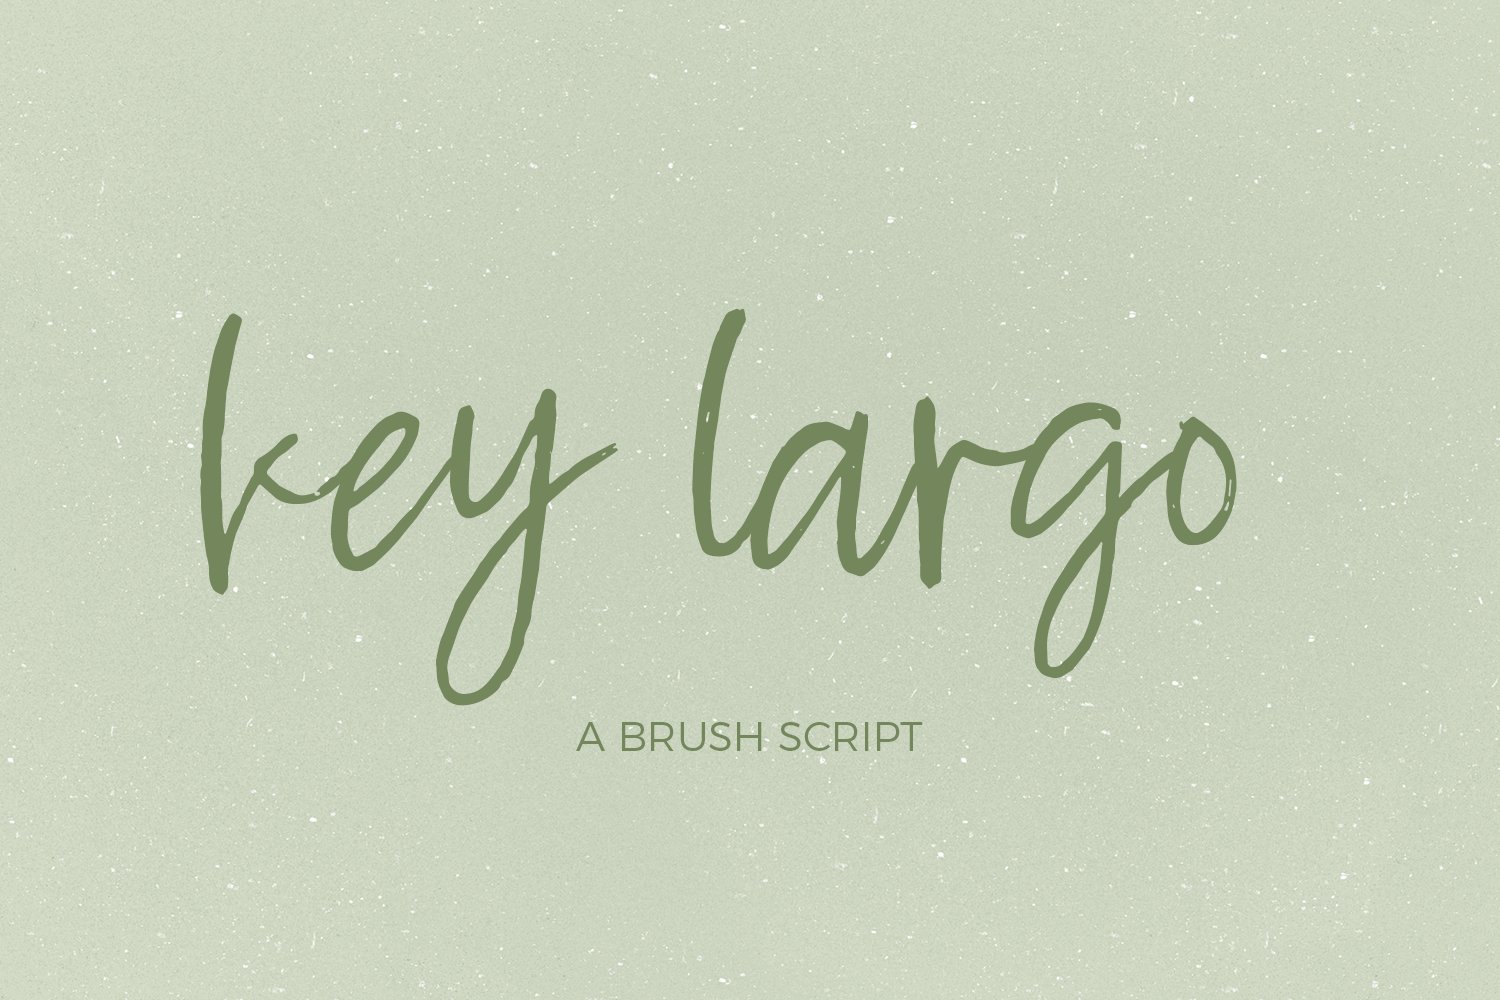 Key Largo Brush Script cover image.